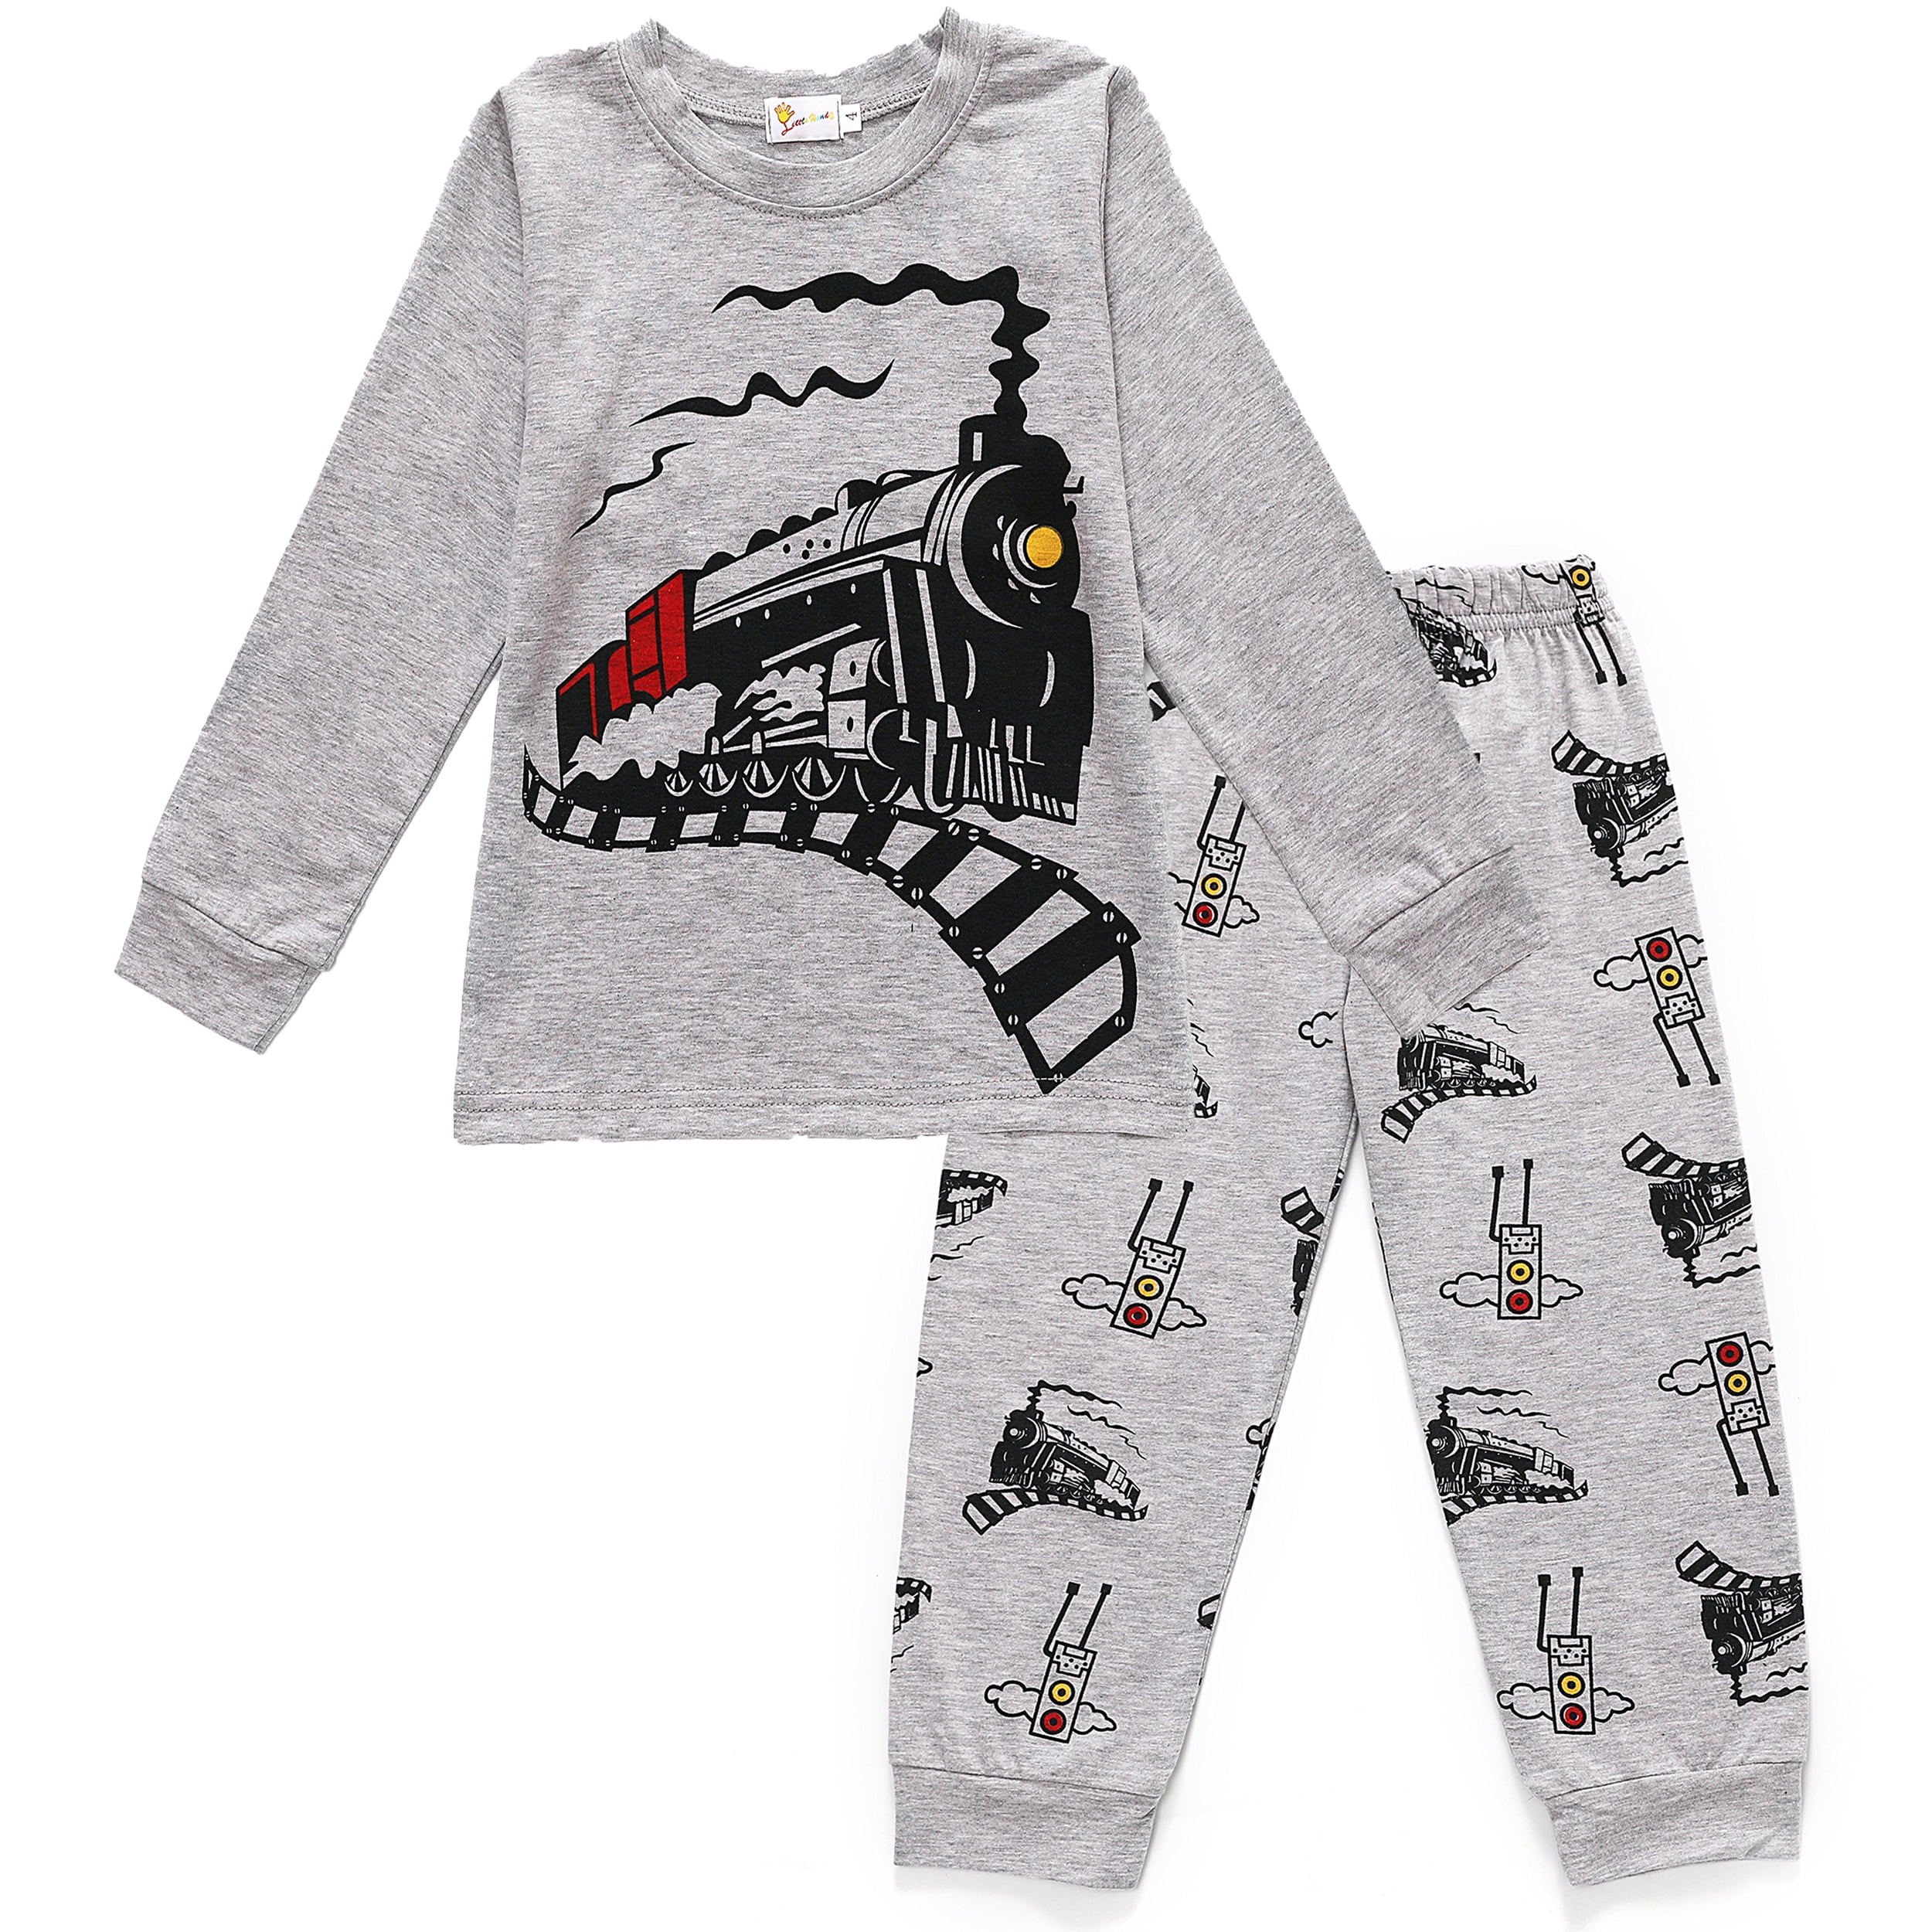 Little Boys Short Set Pajamas for Boys 100% Cotton Toddler Train Dinosaur Sleepwear Summer Clothes Size 2-7T